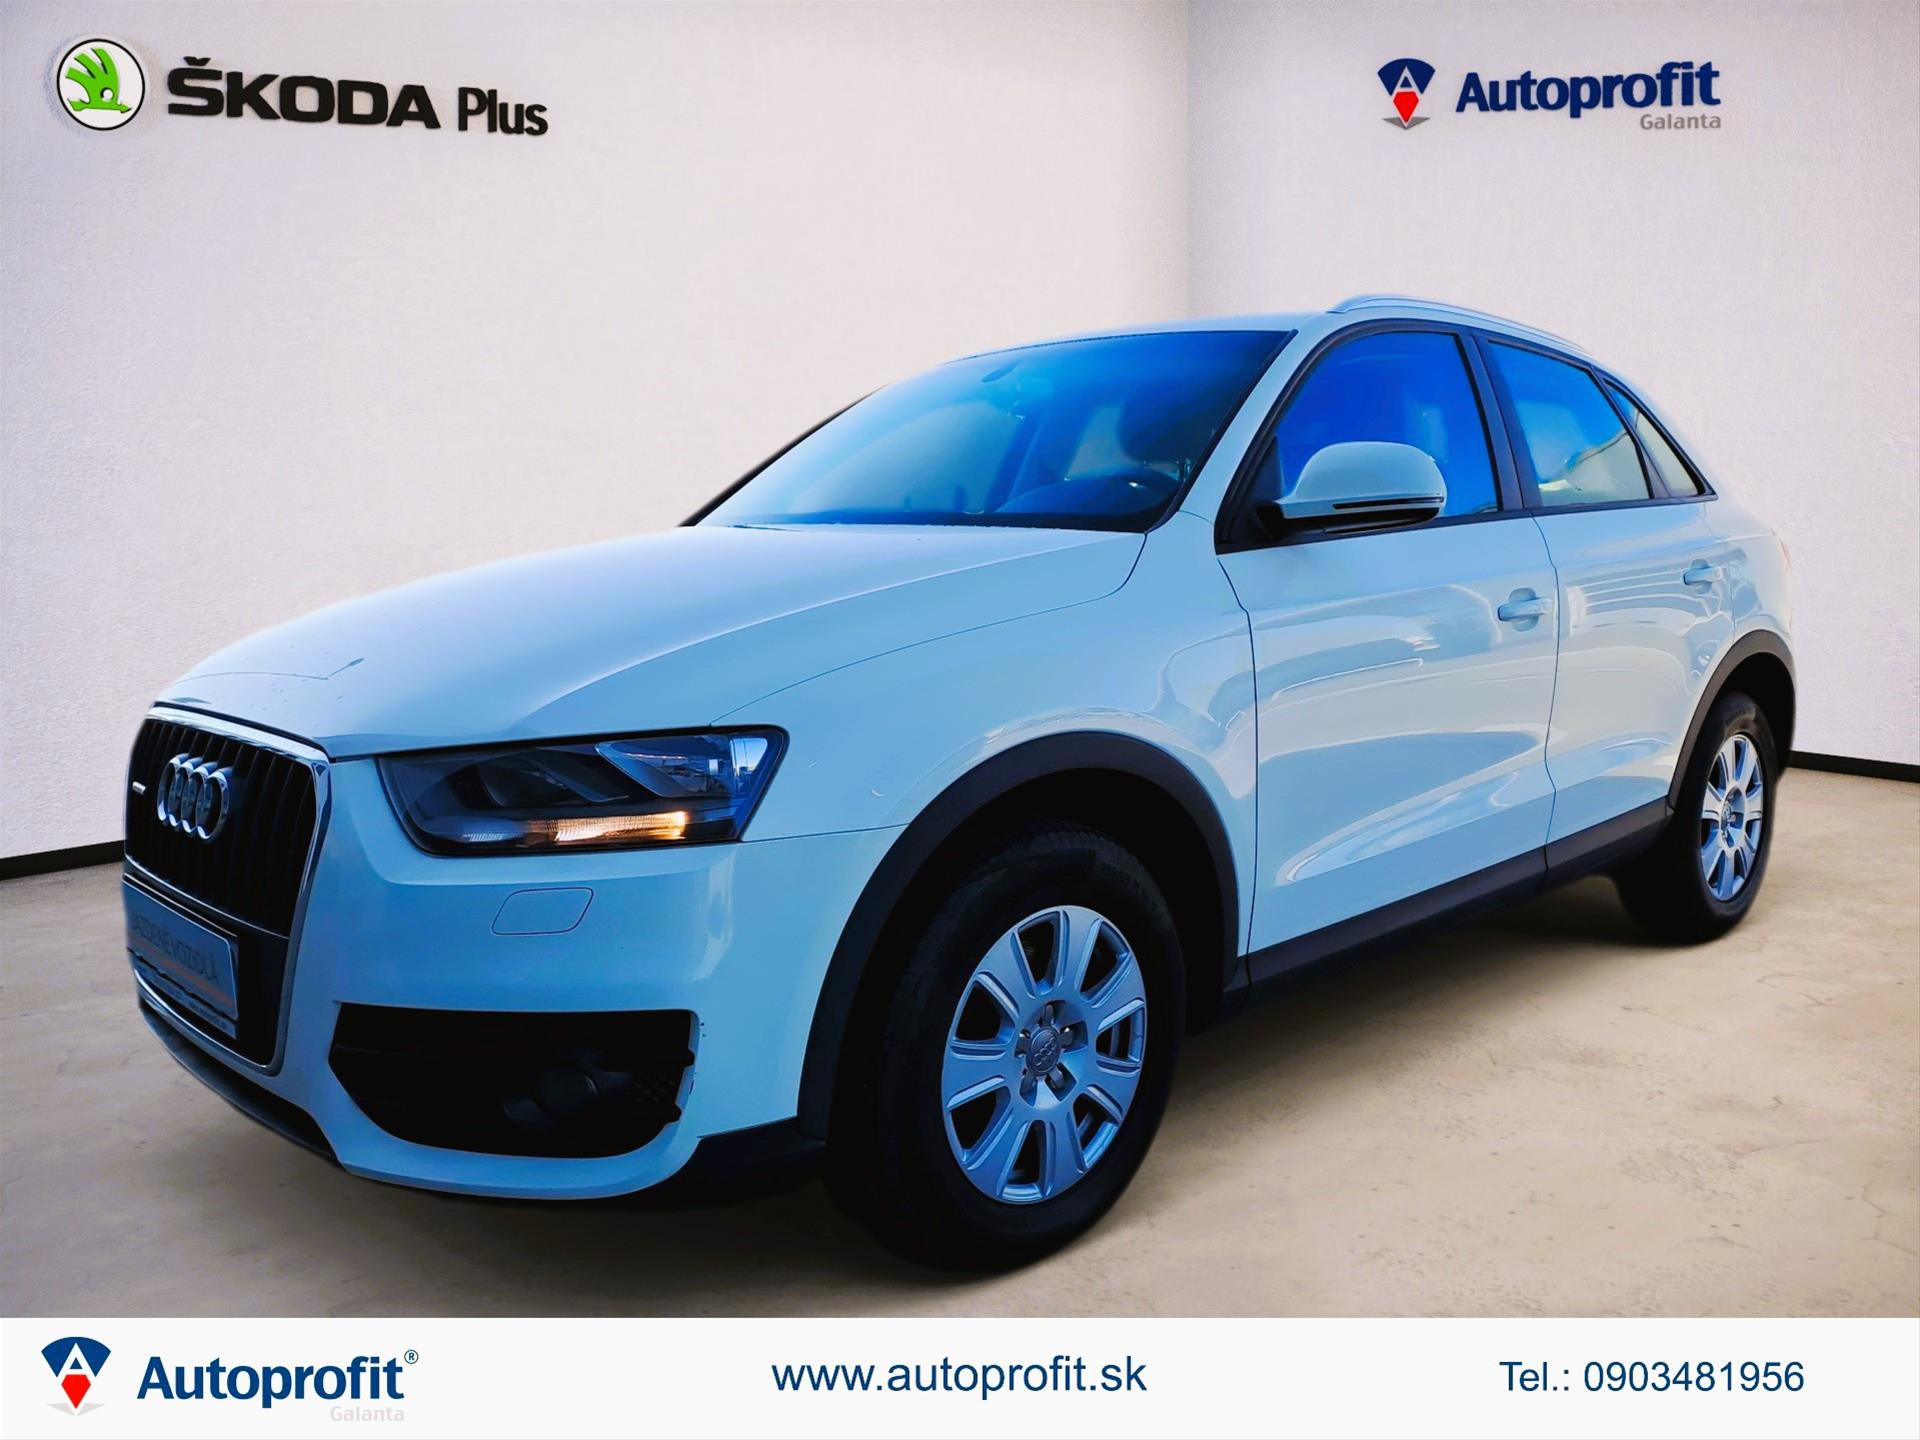 Autoprofit.sk Audi Q3 2.0TSI S-TRONIC